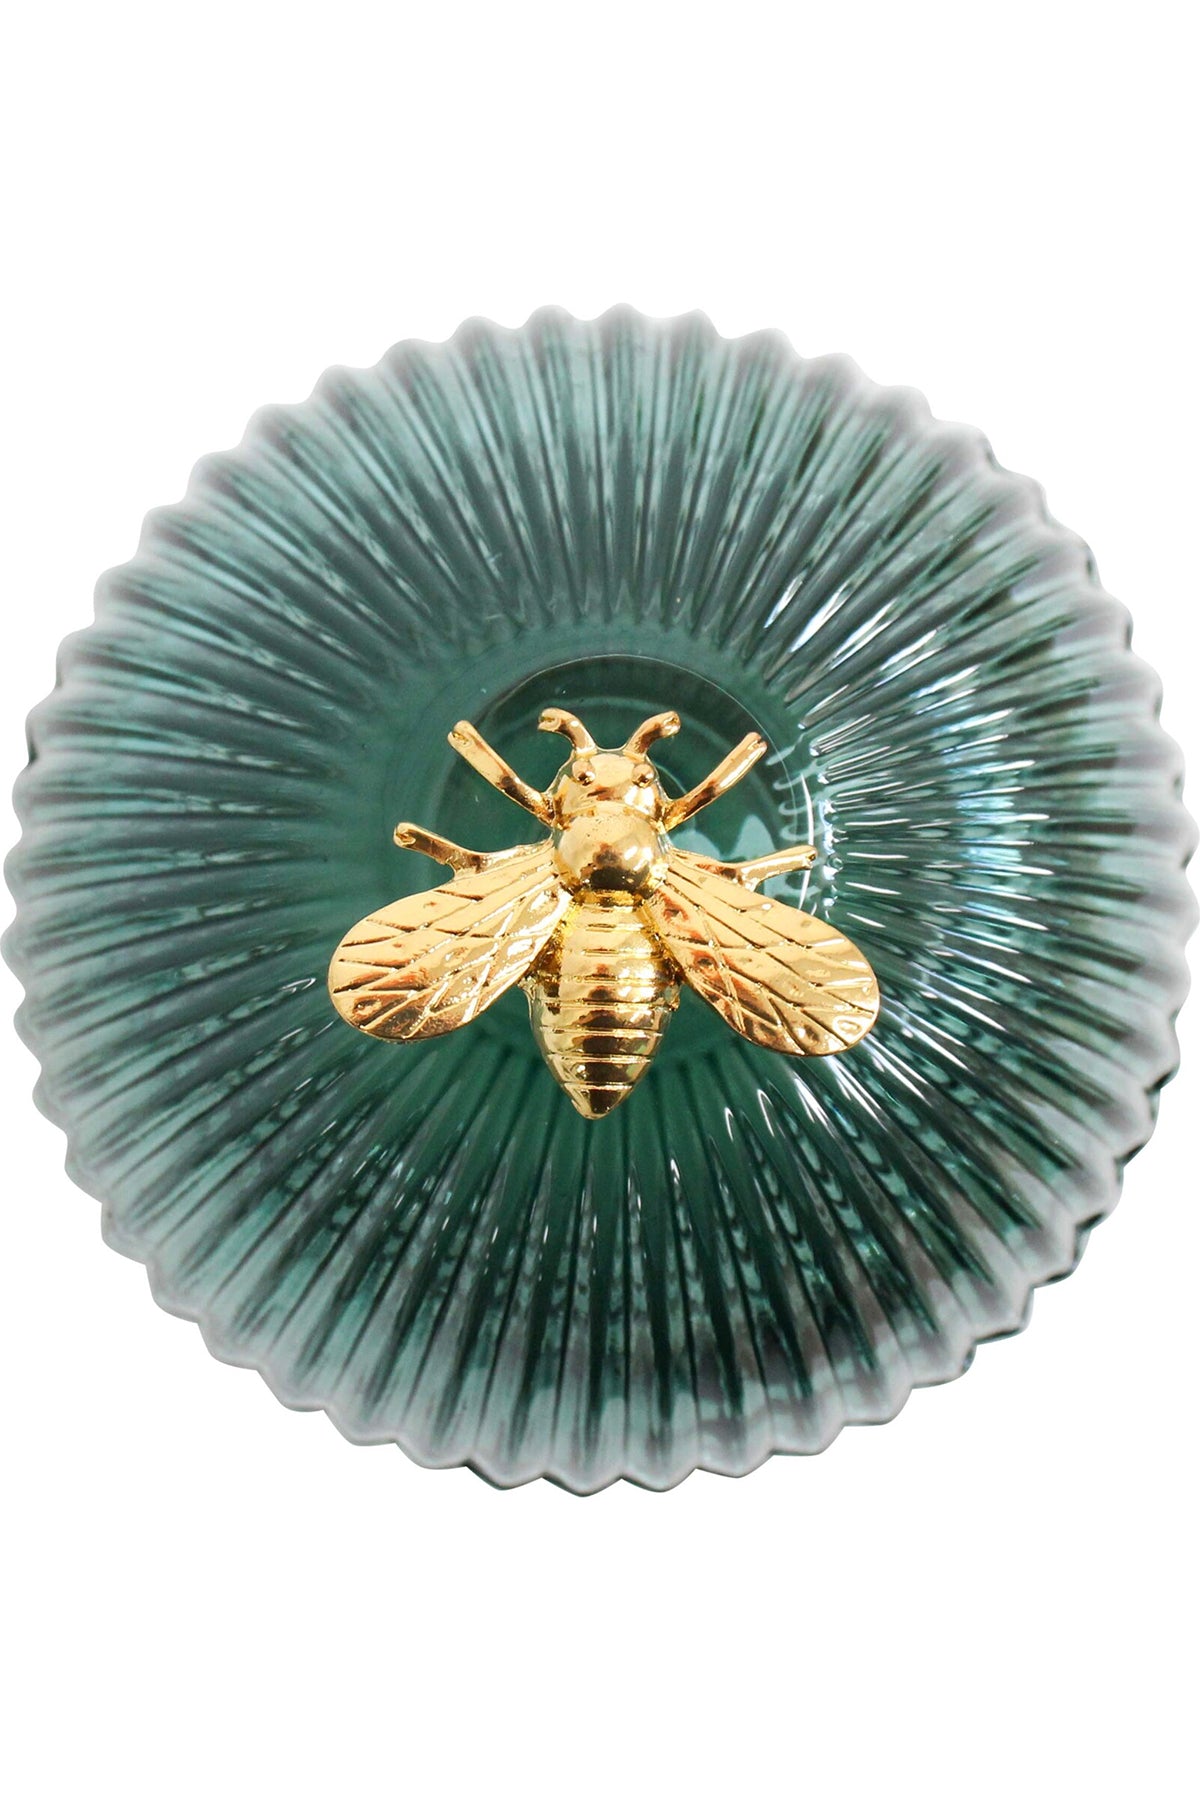 Glass Trinket Box with Bee